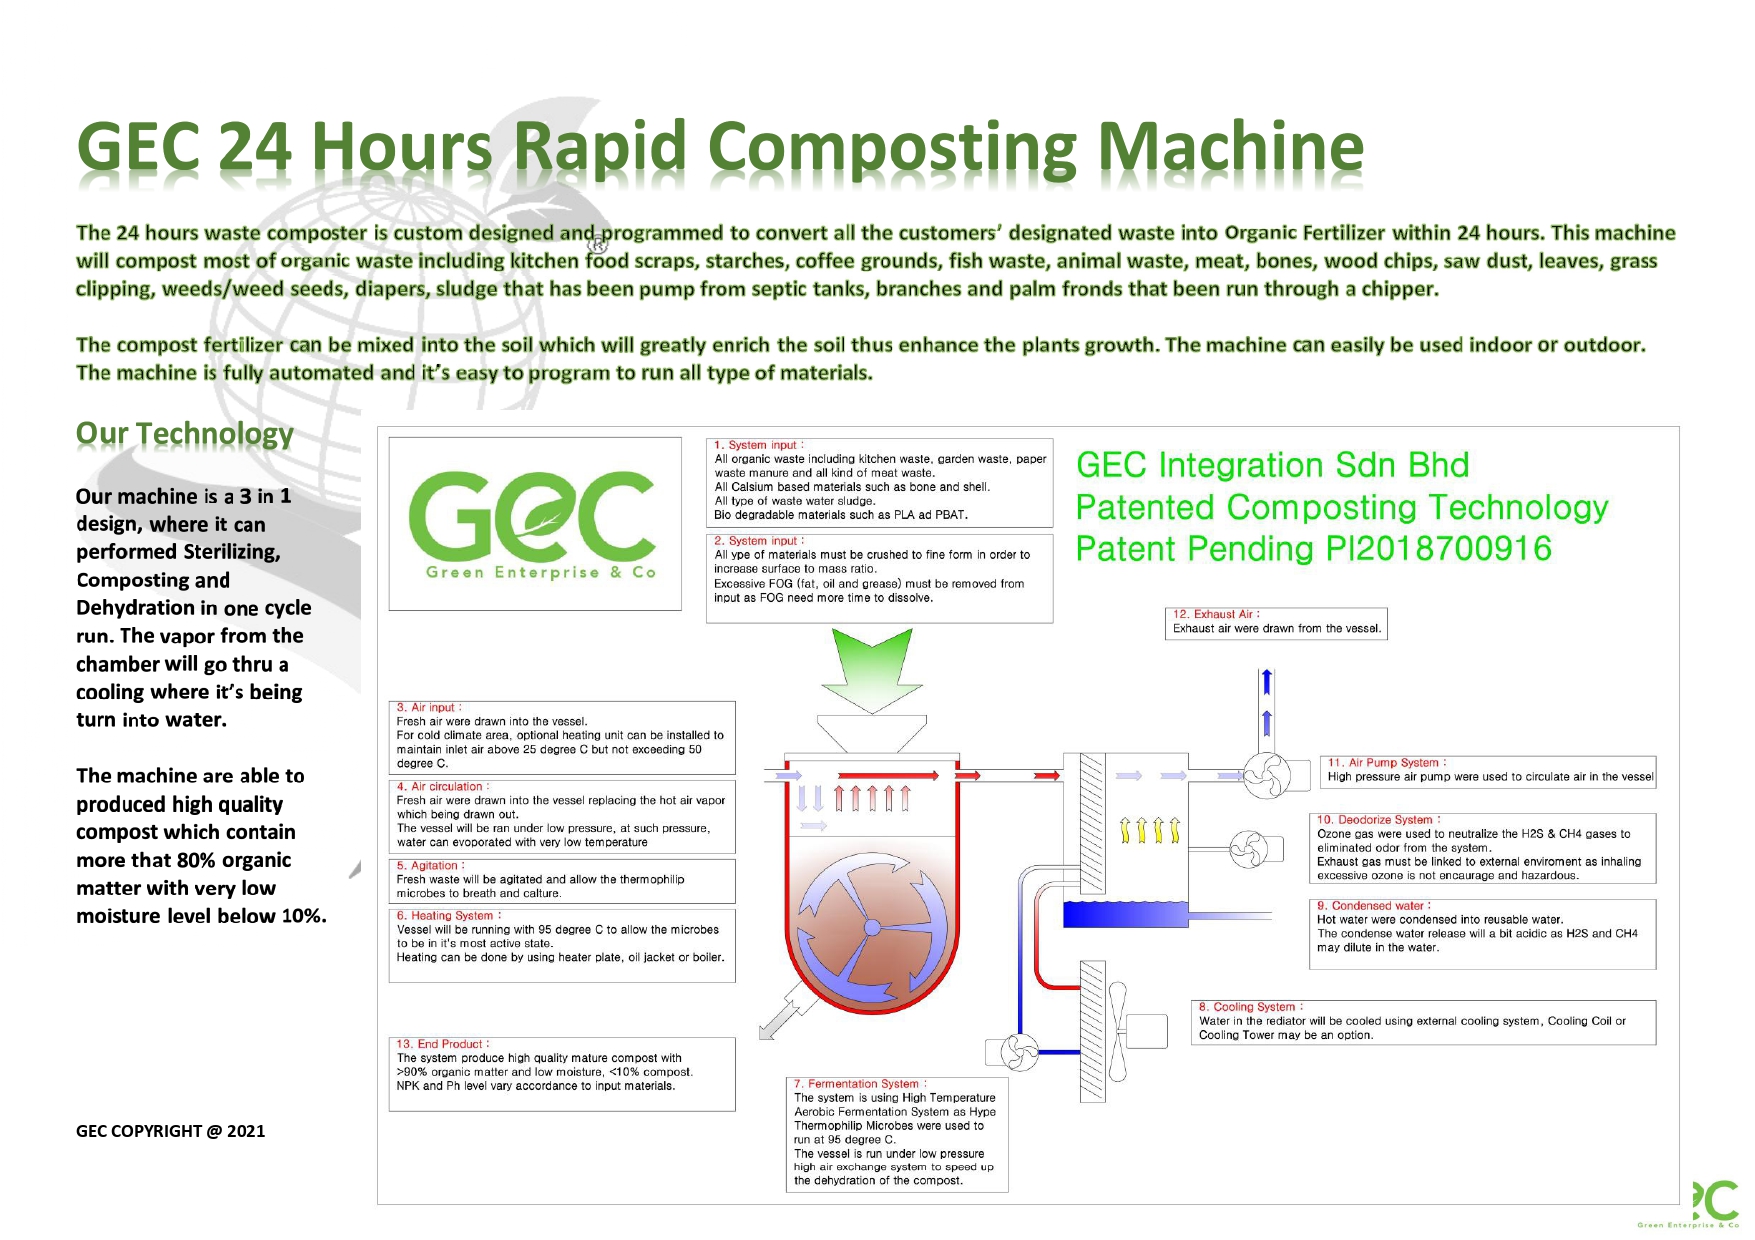 GEC Composting Machine | 24 hrs rapid composting machine - industrial series 2021 Rev00_page-0002